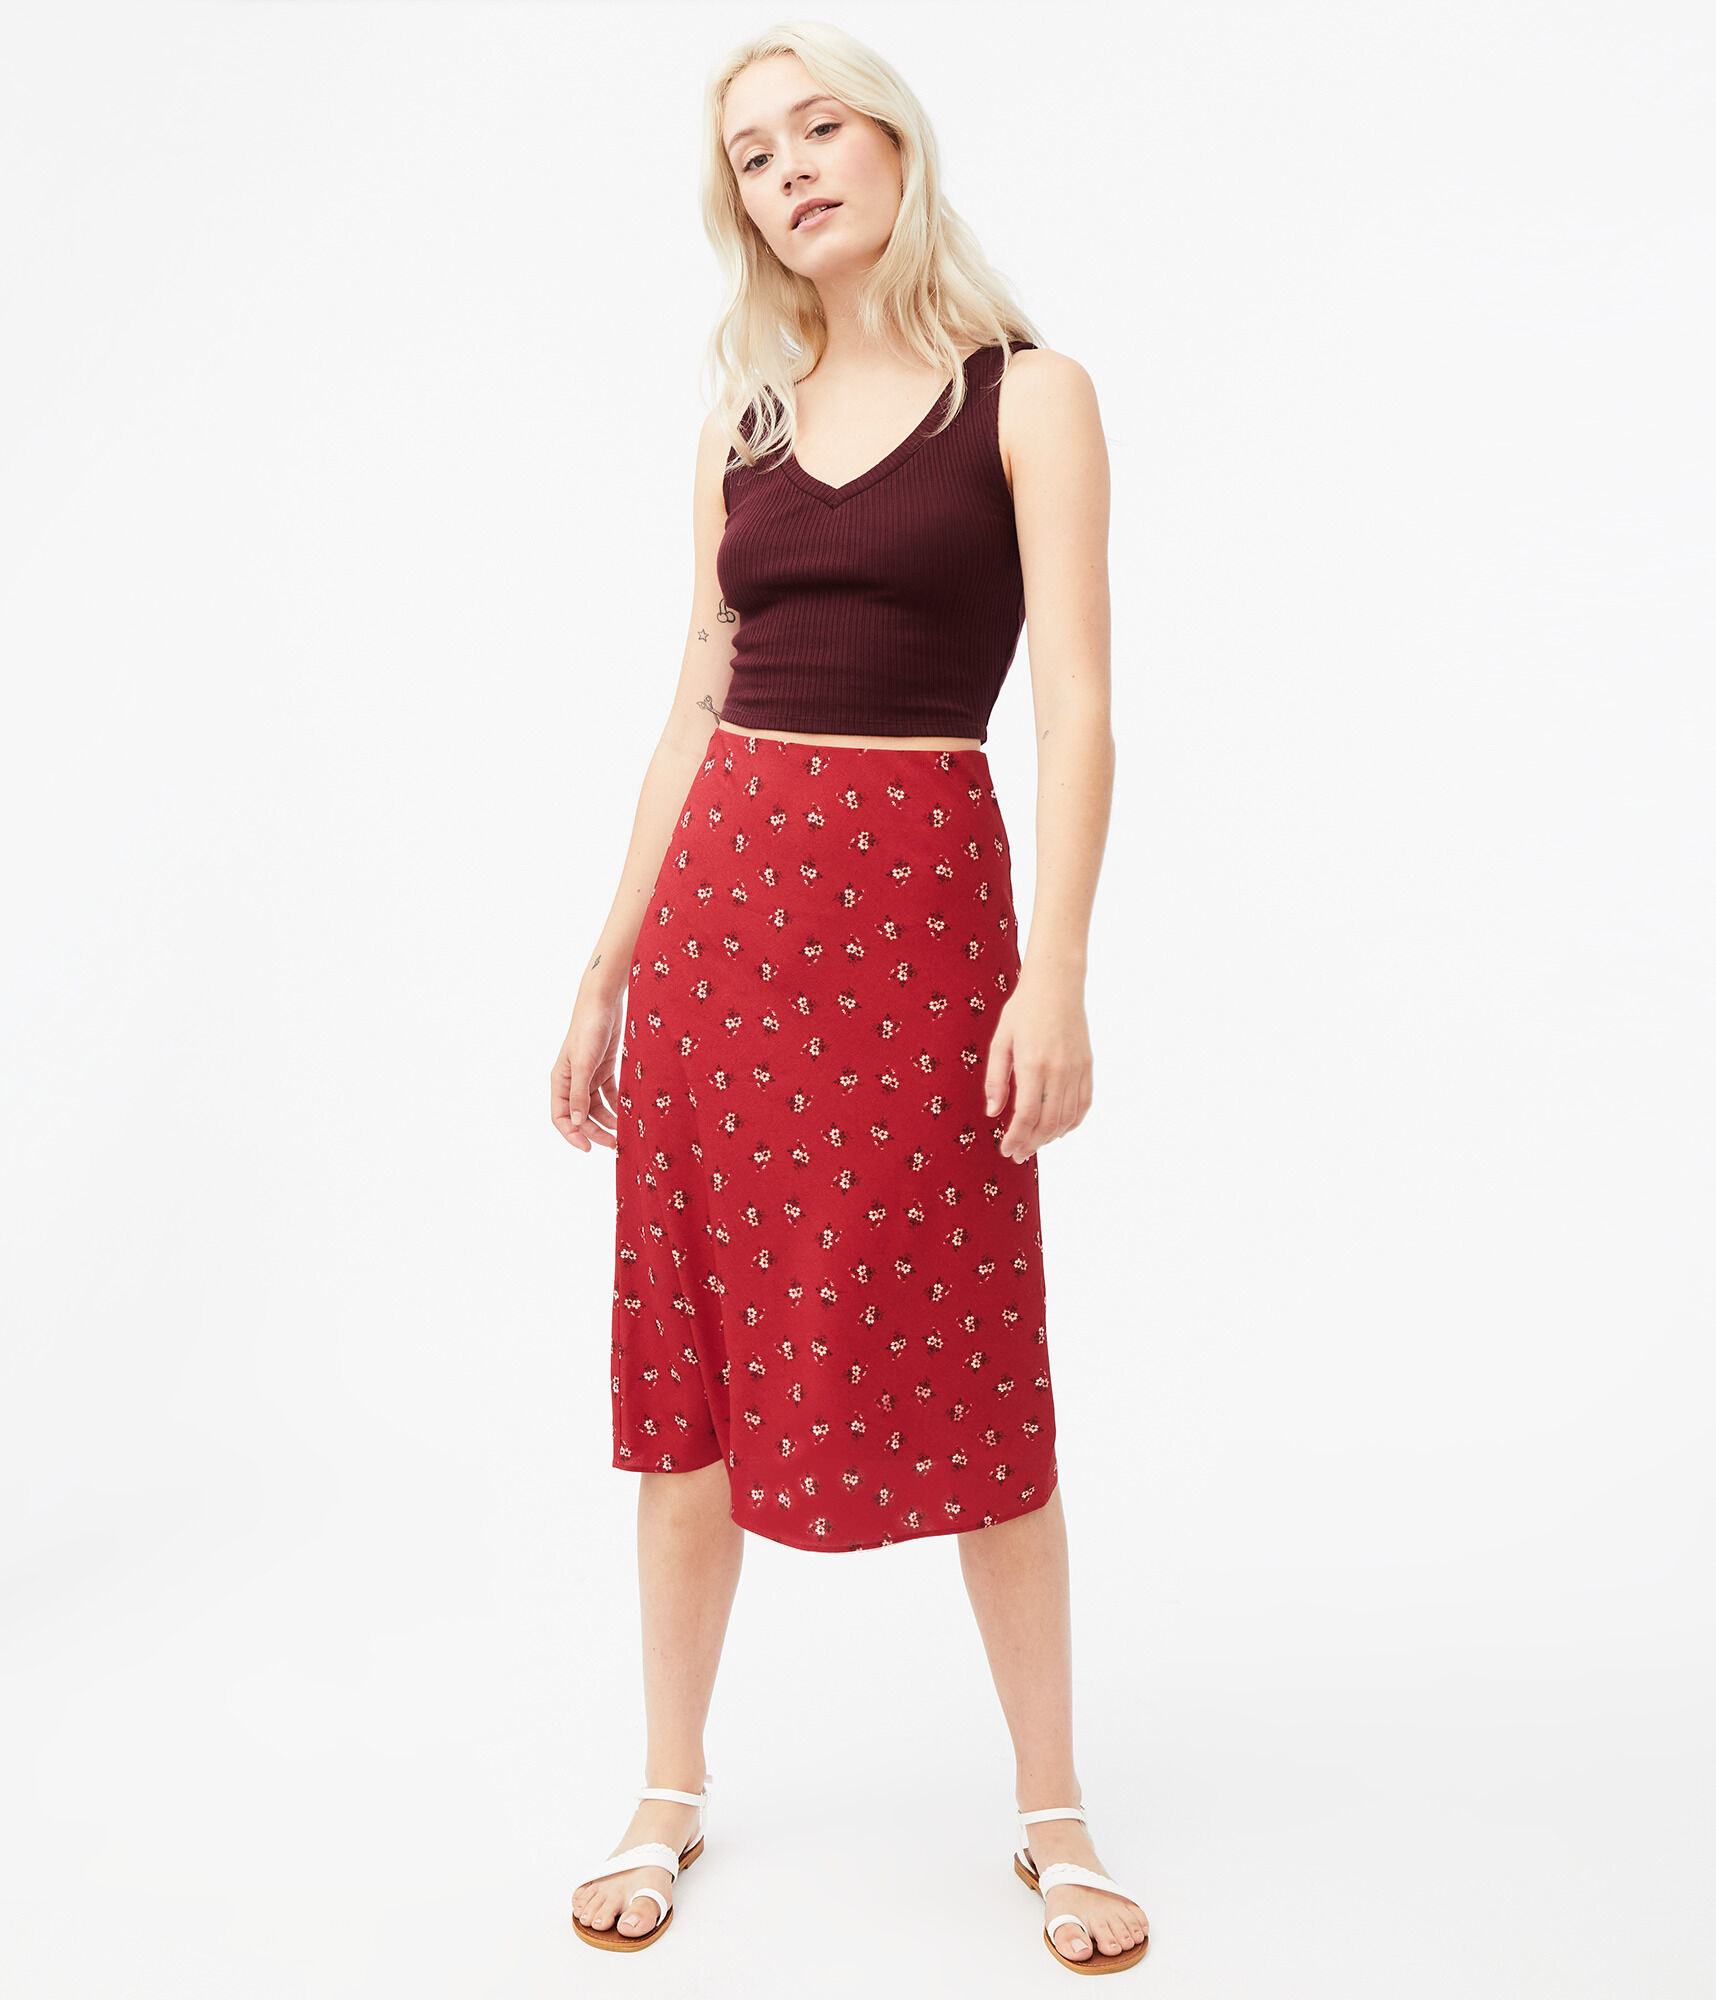 Model in the skirt in red